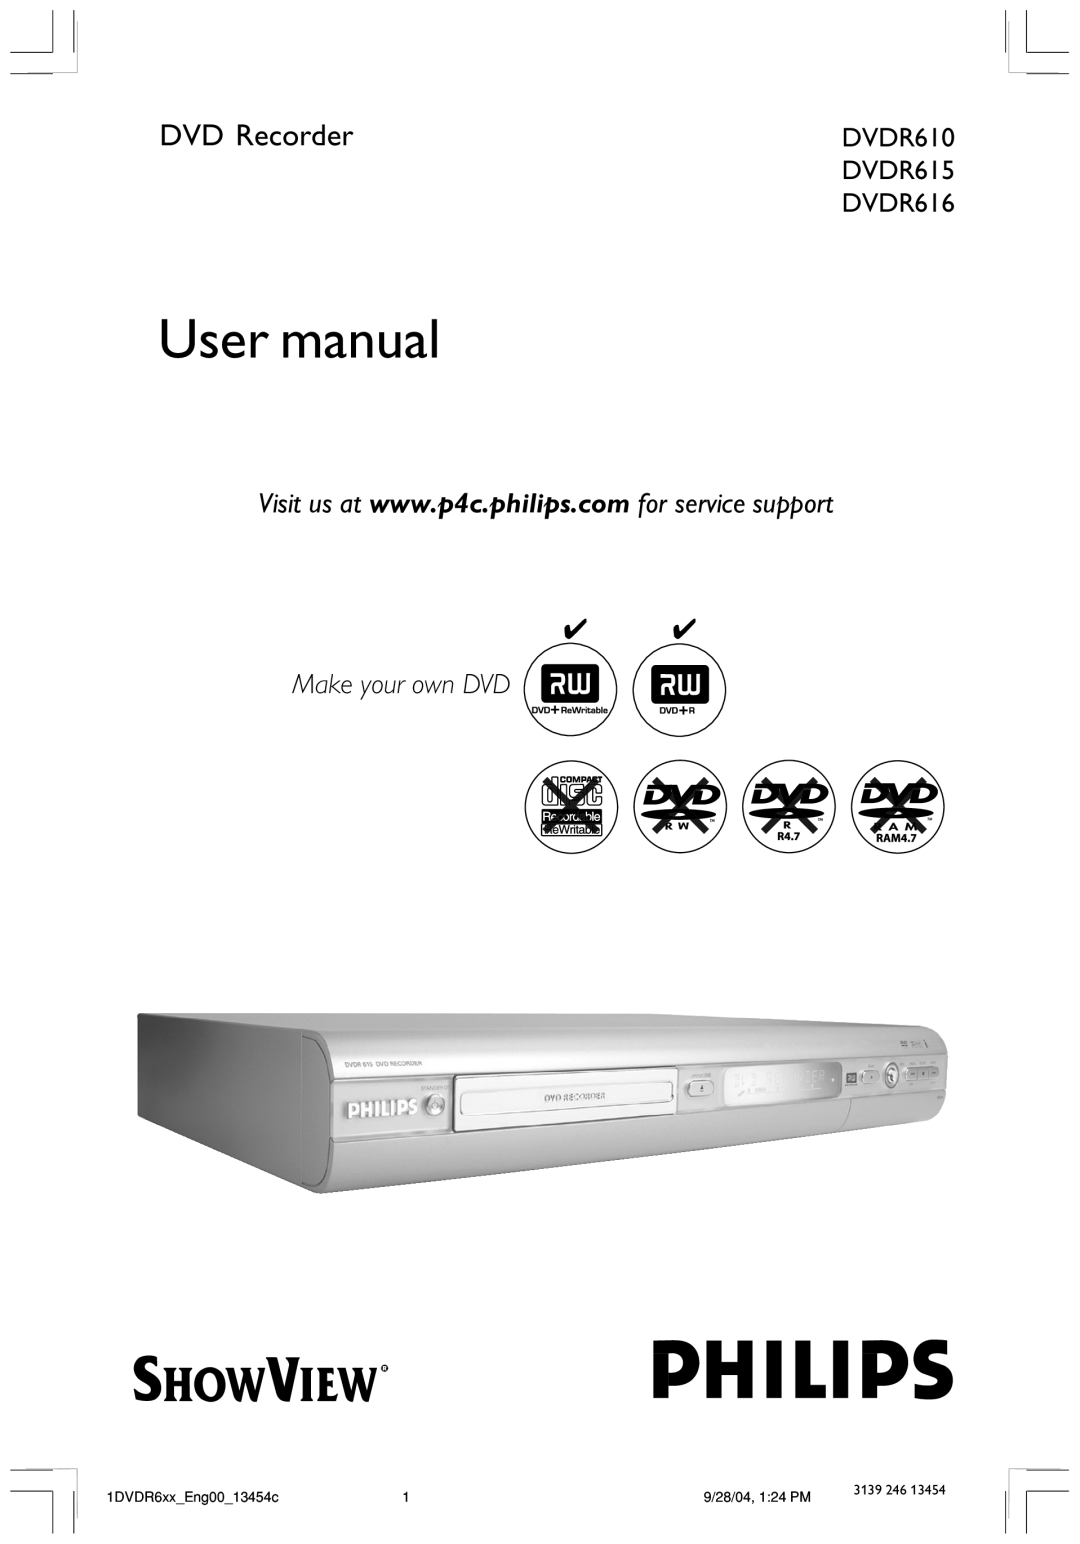 Philips DVDR612 user manual User manual, DVD Recorder, Make your own DVD, DVDR610, DVDR615, DVDR616, 1DVDR6xxEng0013454c 